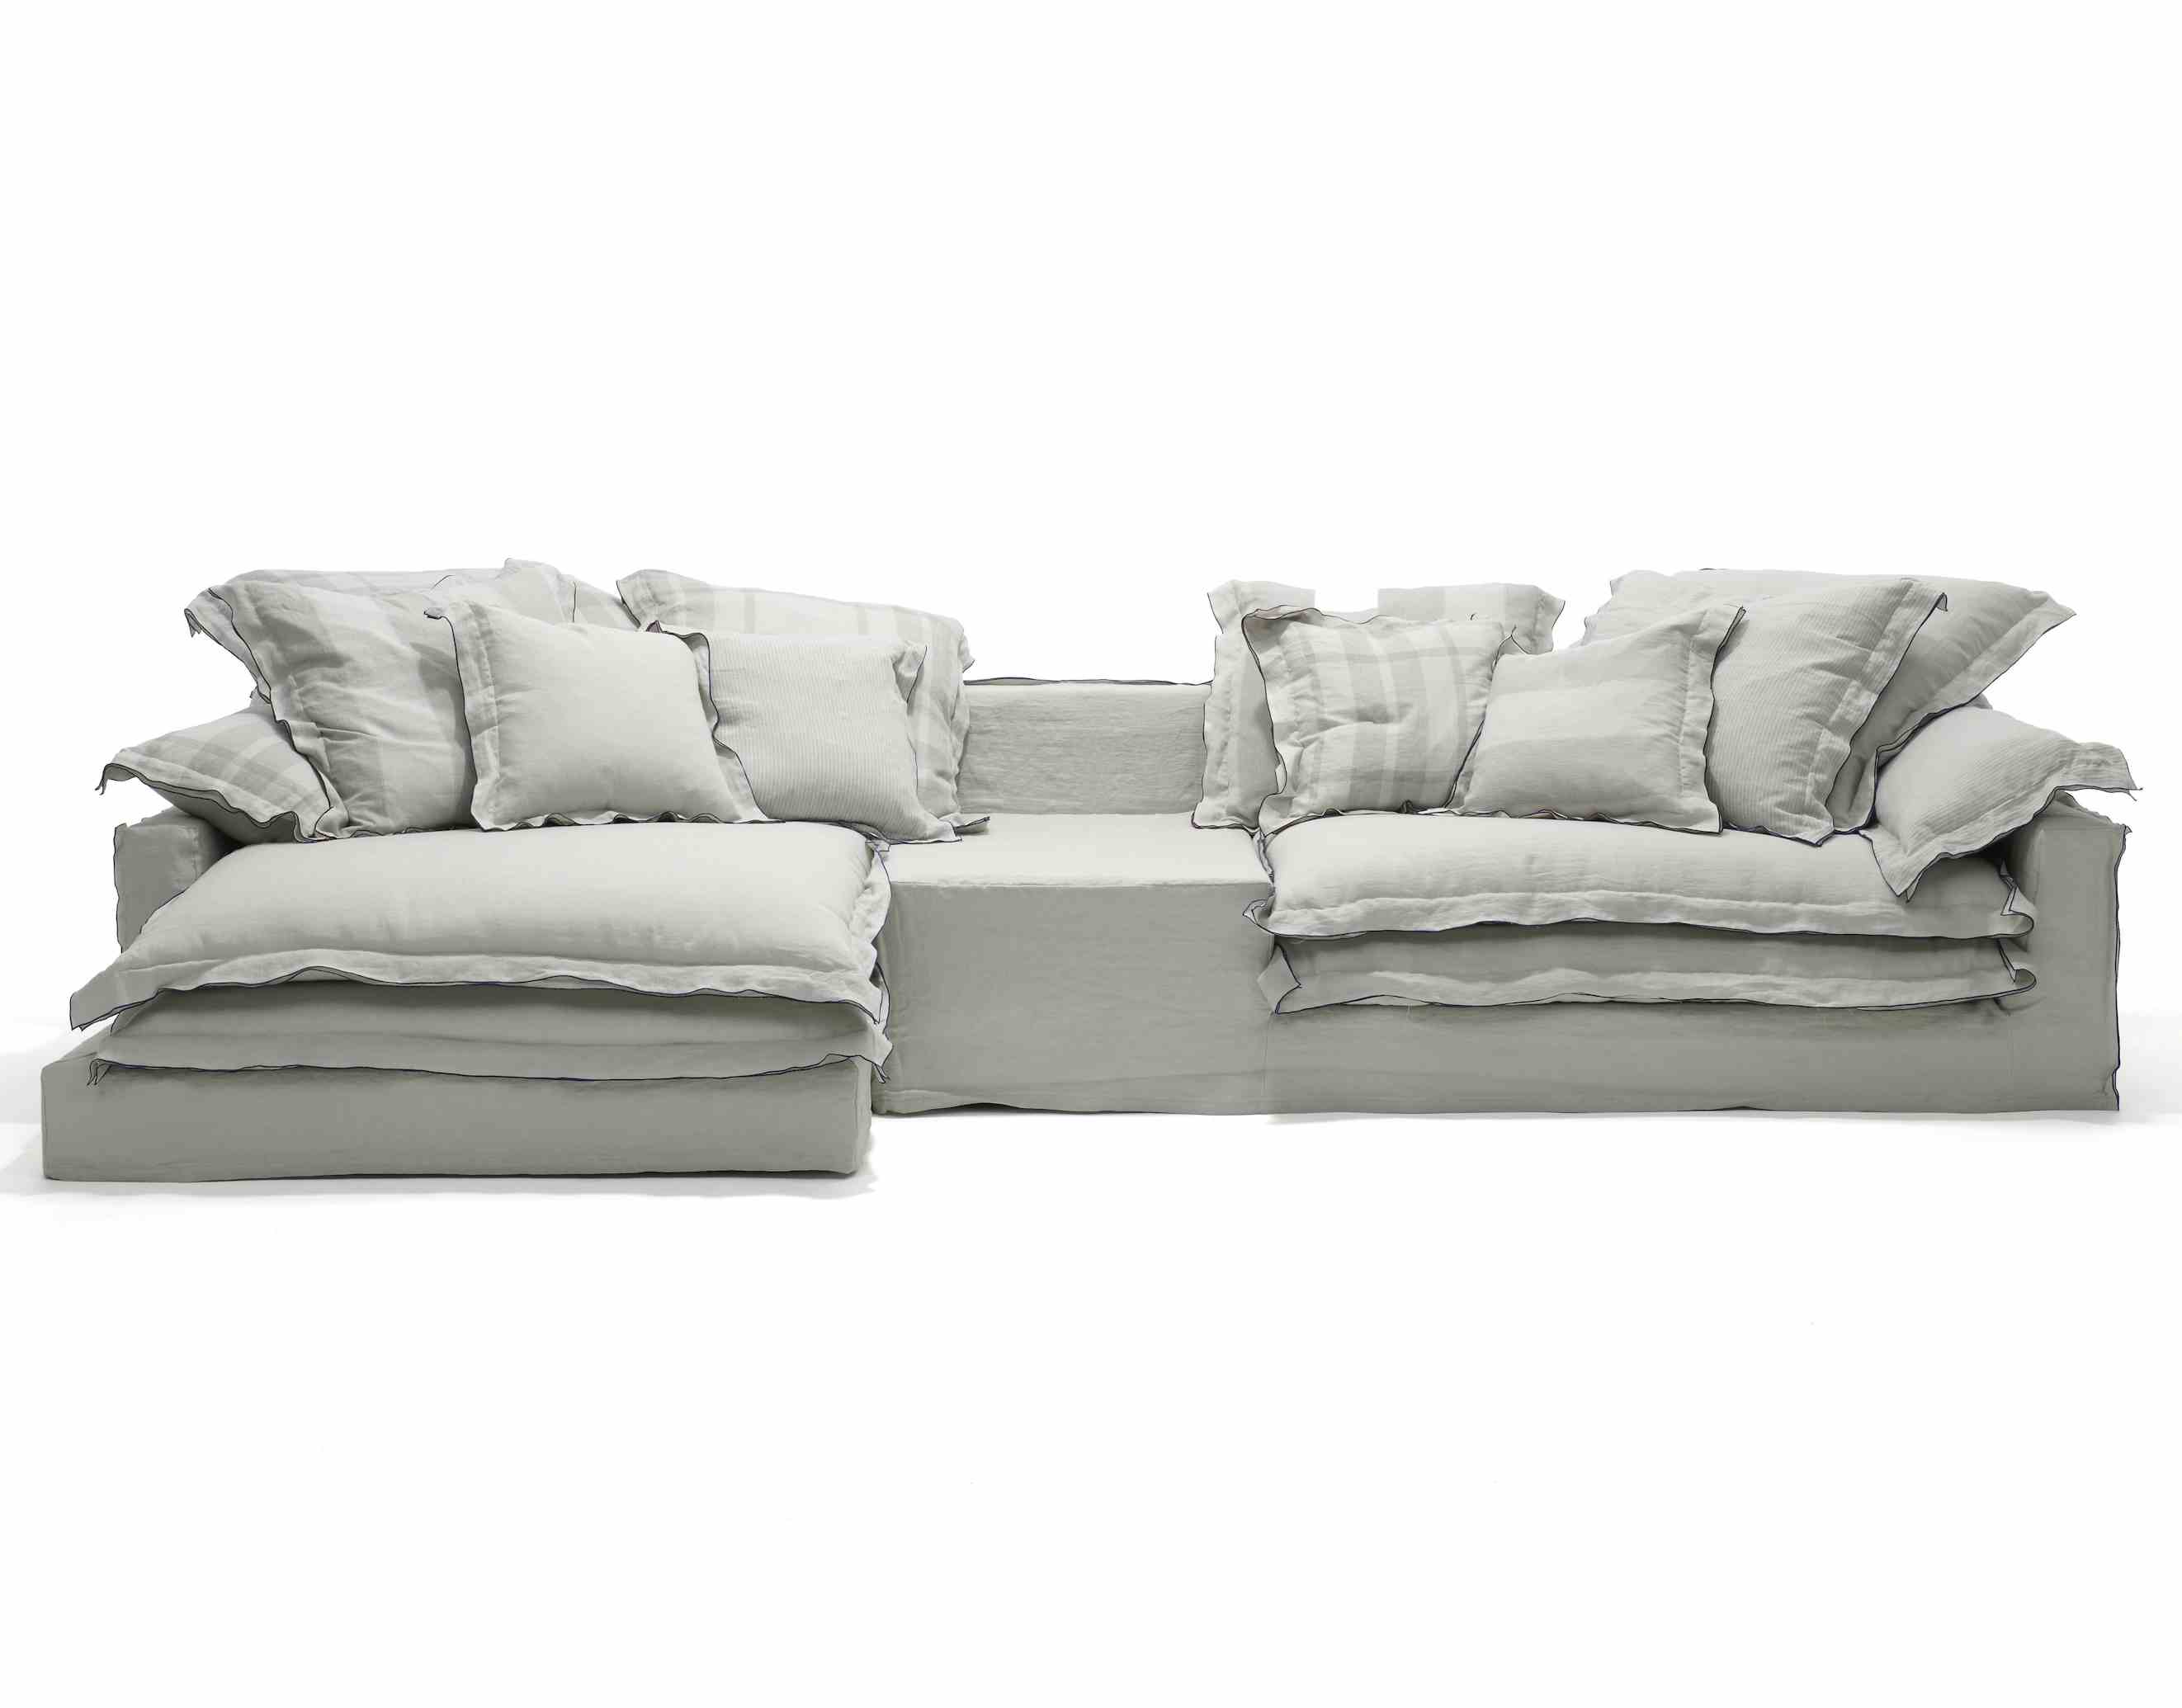 Linteloo-grey-jans-new-sofa-haute-living